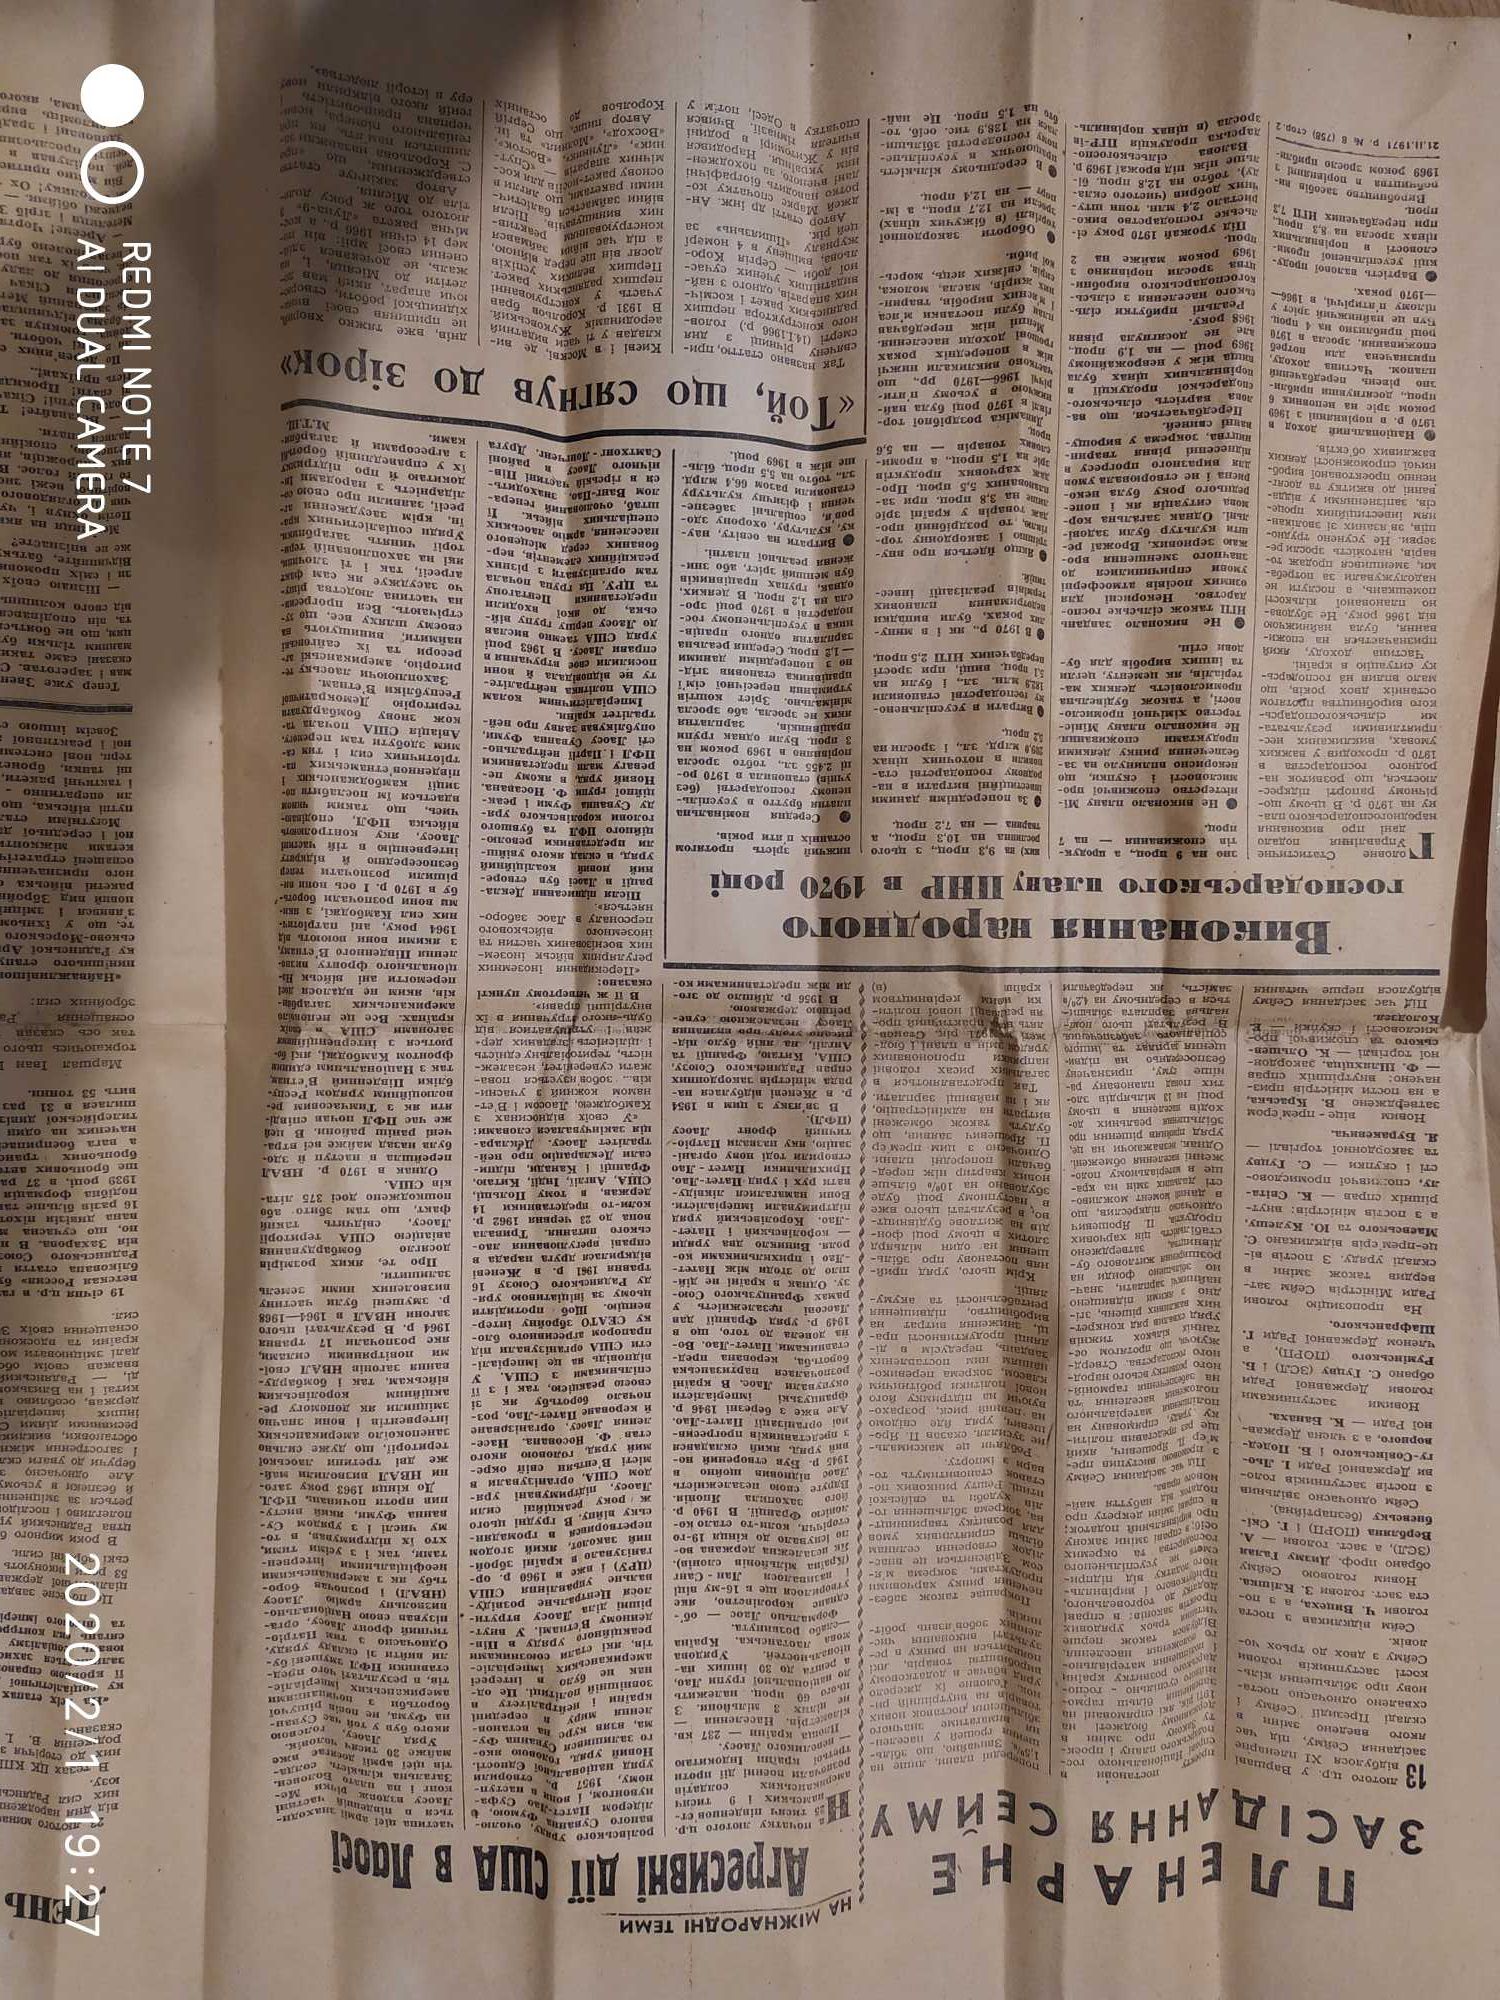 Газета "Наше слово", Варшава 1971-72 рік